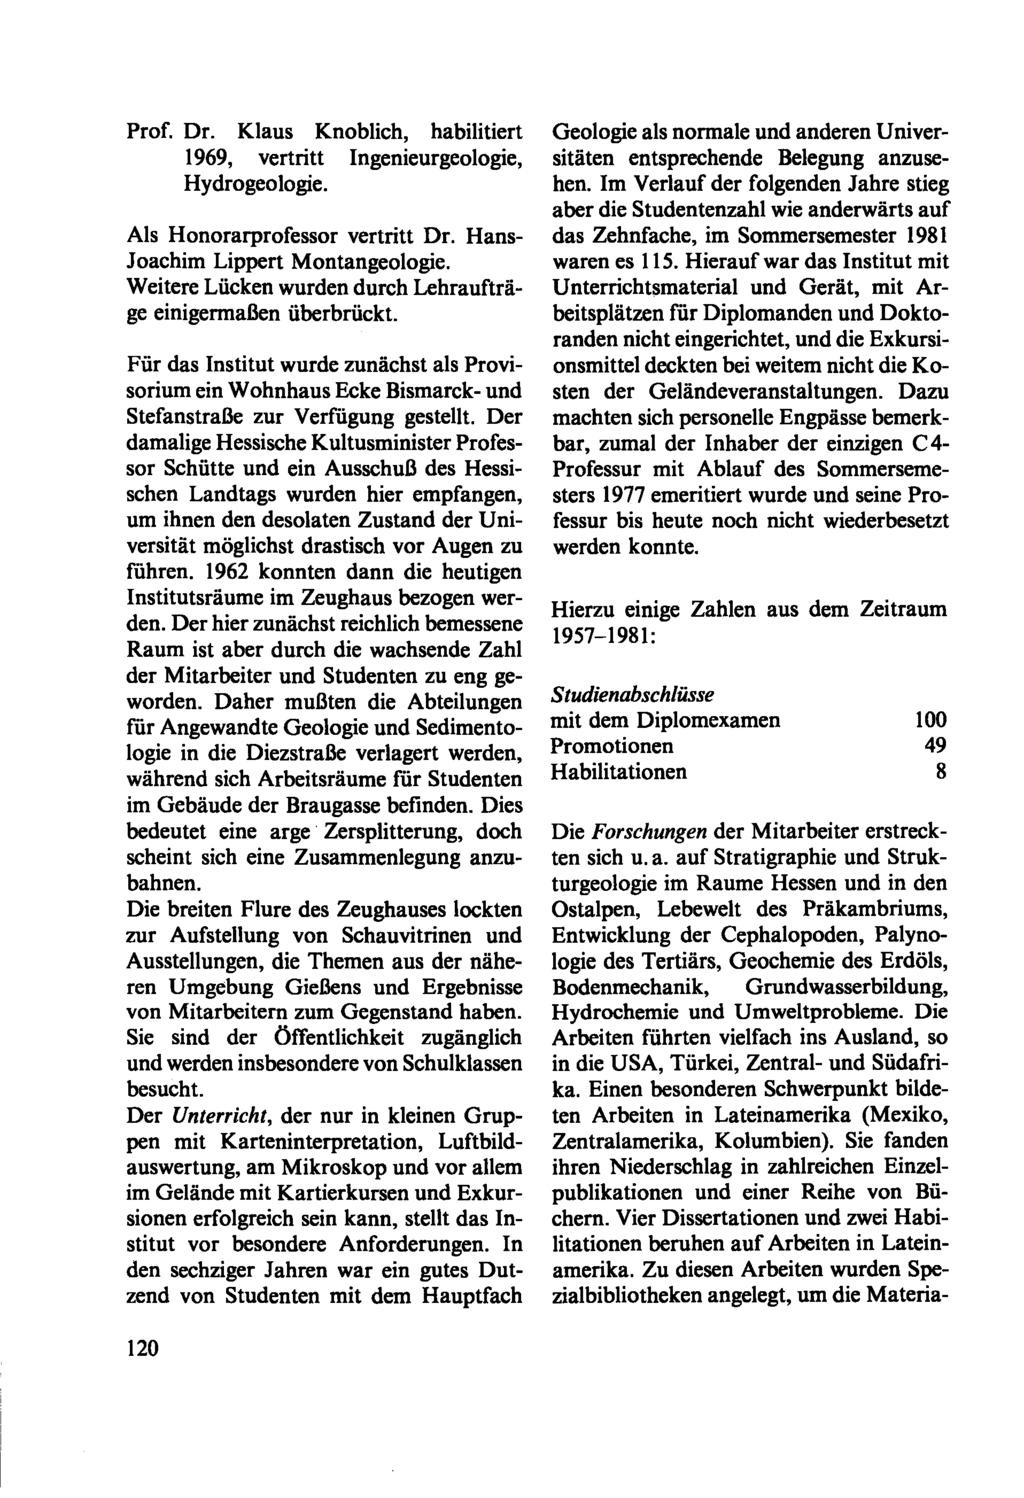 Prof. Dr. Klaus Knoblich, habilitiert 1969, vertritt Ingenieurgeologie, Hydrogeologie. Als Honorarprofessor vertritt Dr. Hans Joachim Lippert Montangeologie.